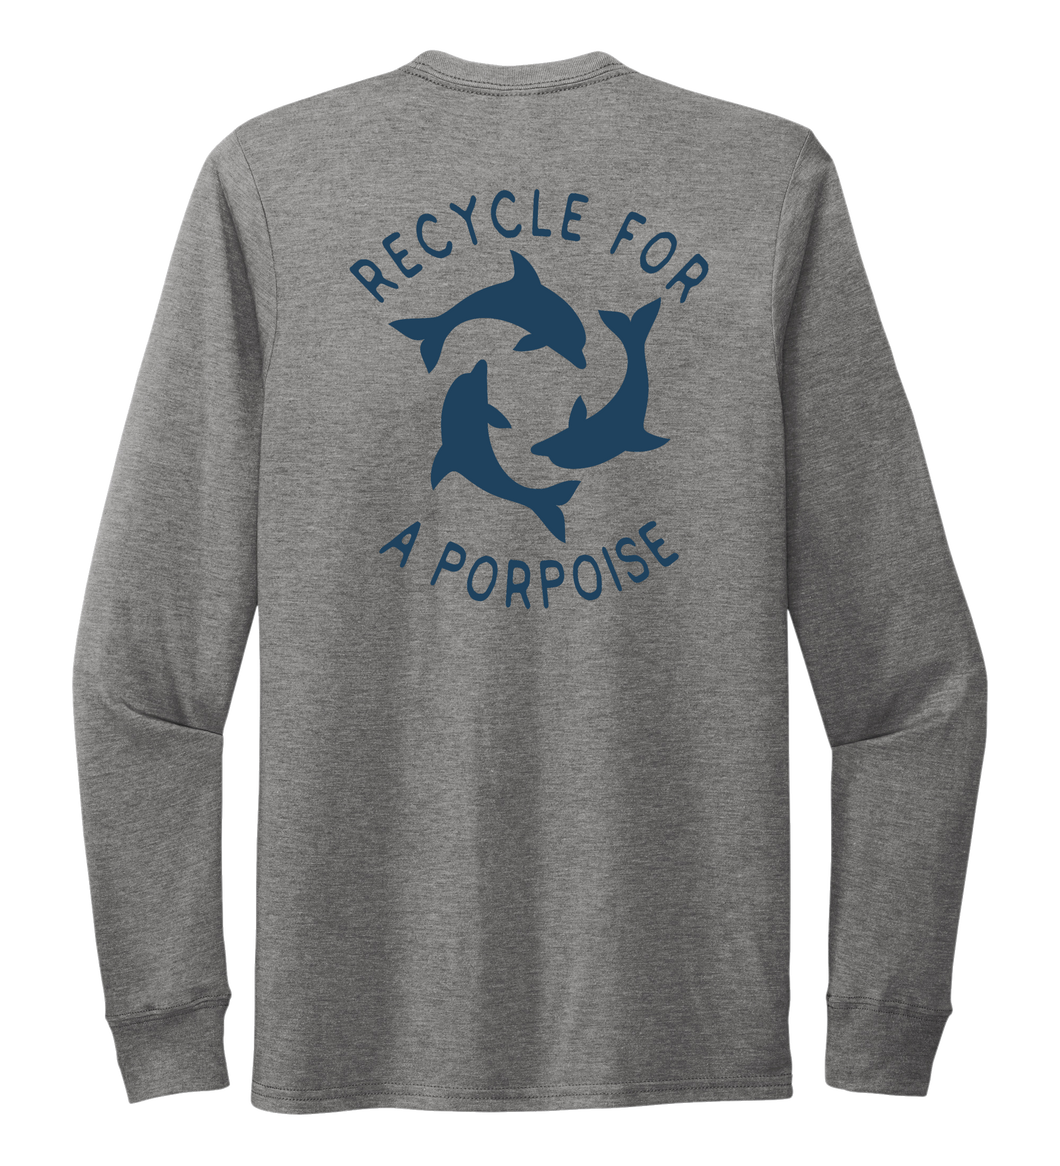 StepChange, Porpoise, Unisex Crew Neck Long Sleeve T-shirt in Oyster Grey